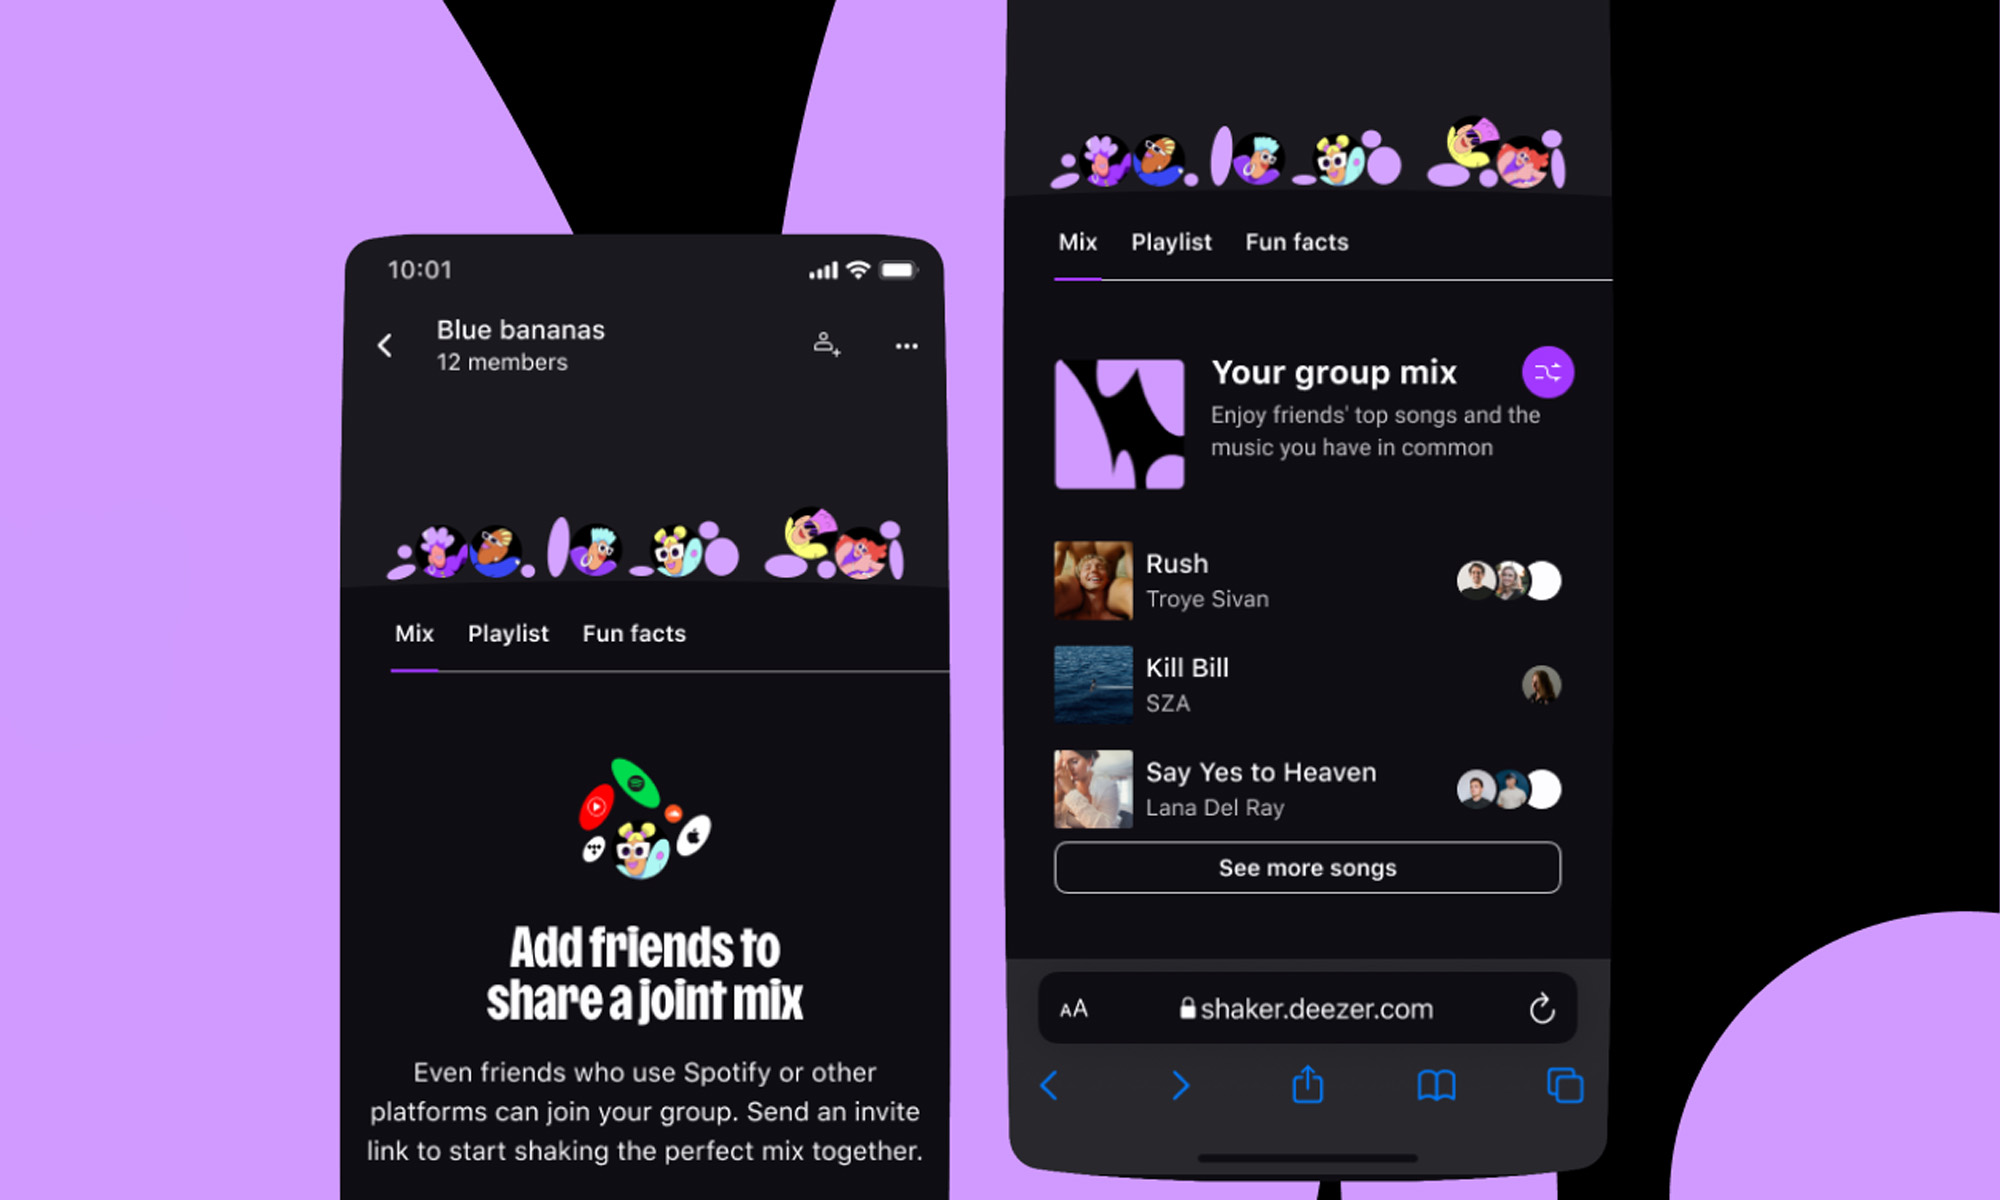 deezer's shaker connects friends across music apps